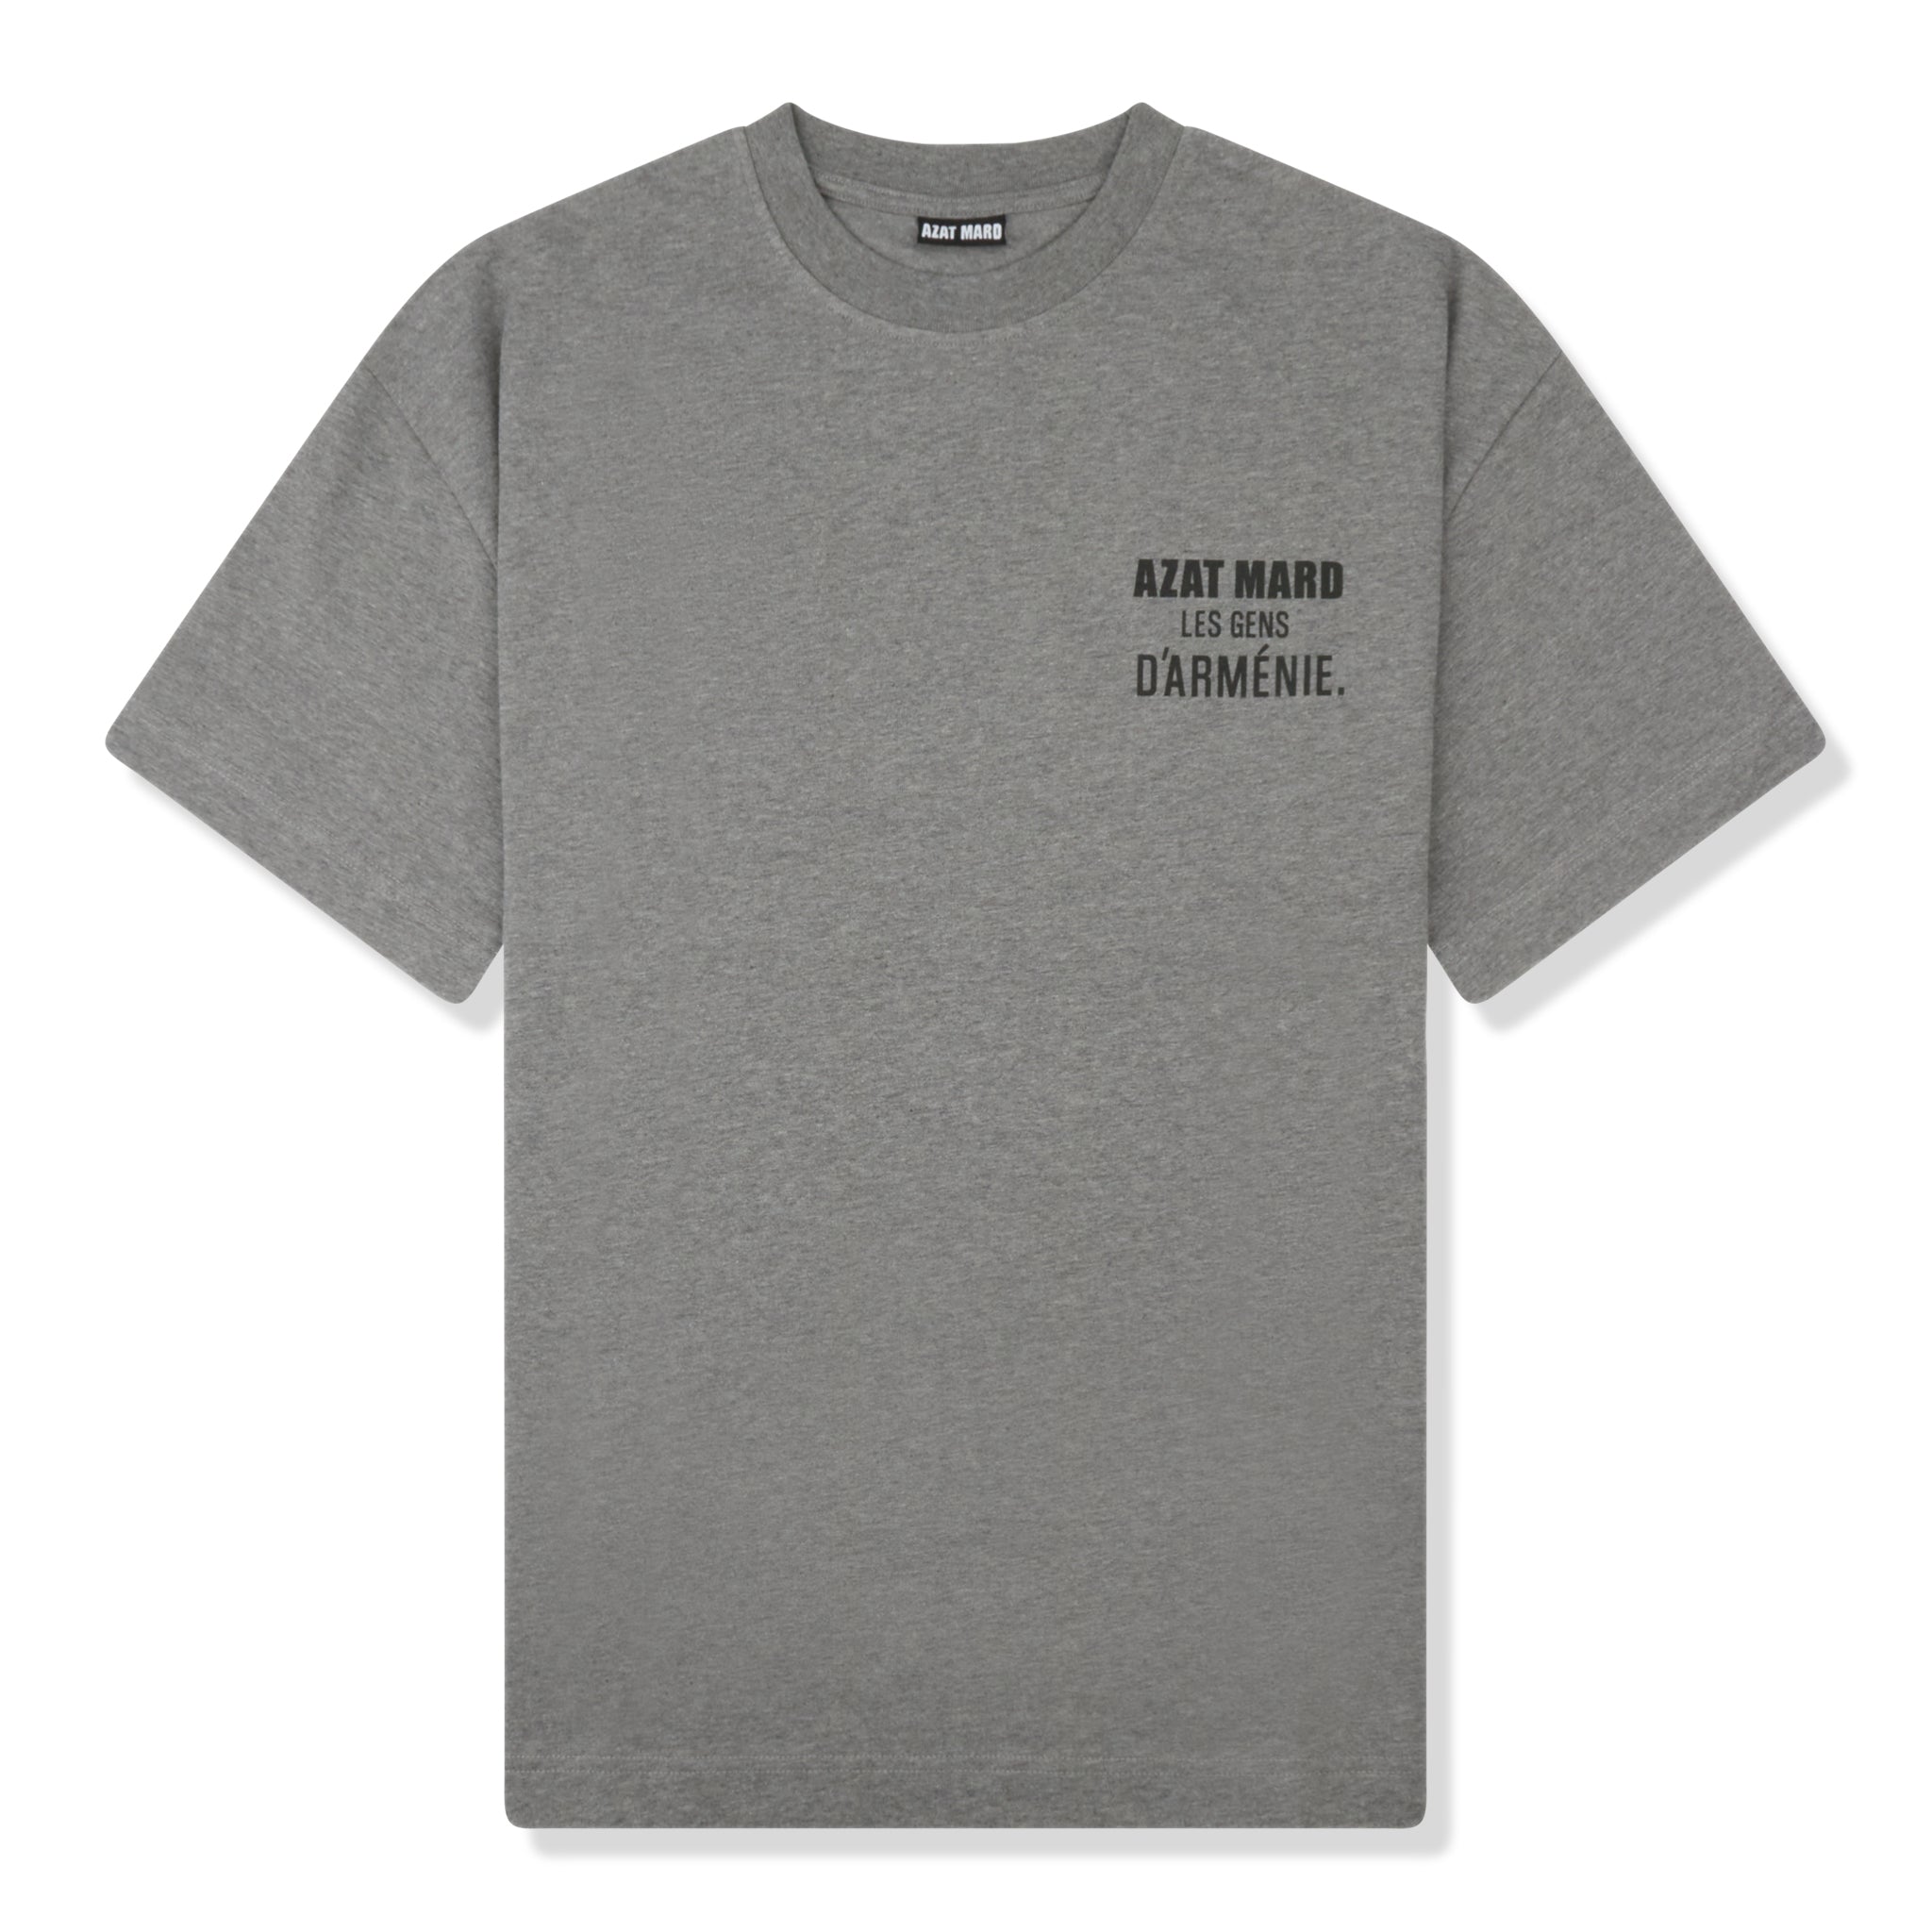 Azat Mard Les Gens T Shirt Grey SS23106